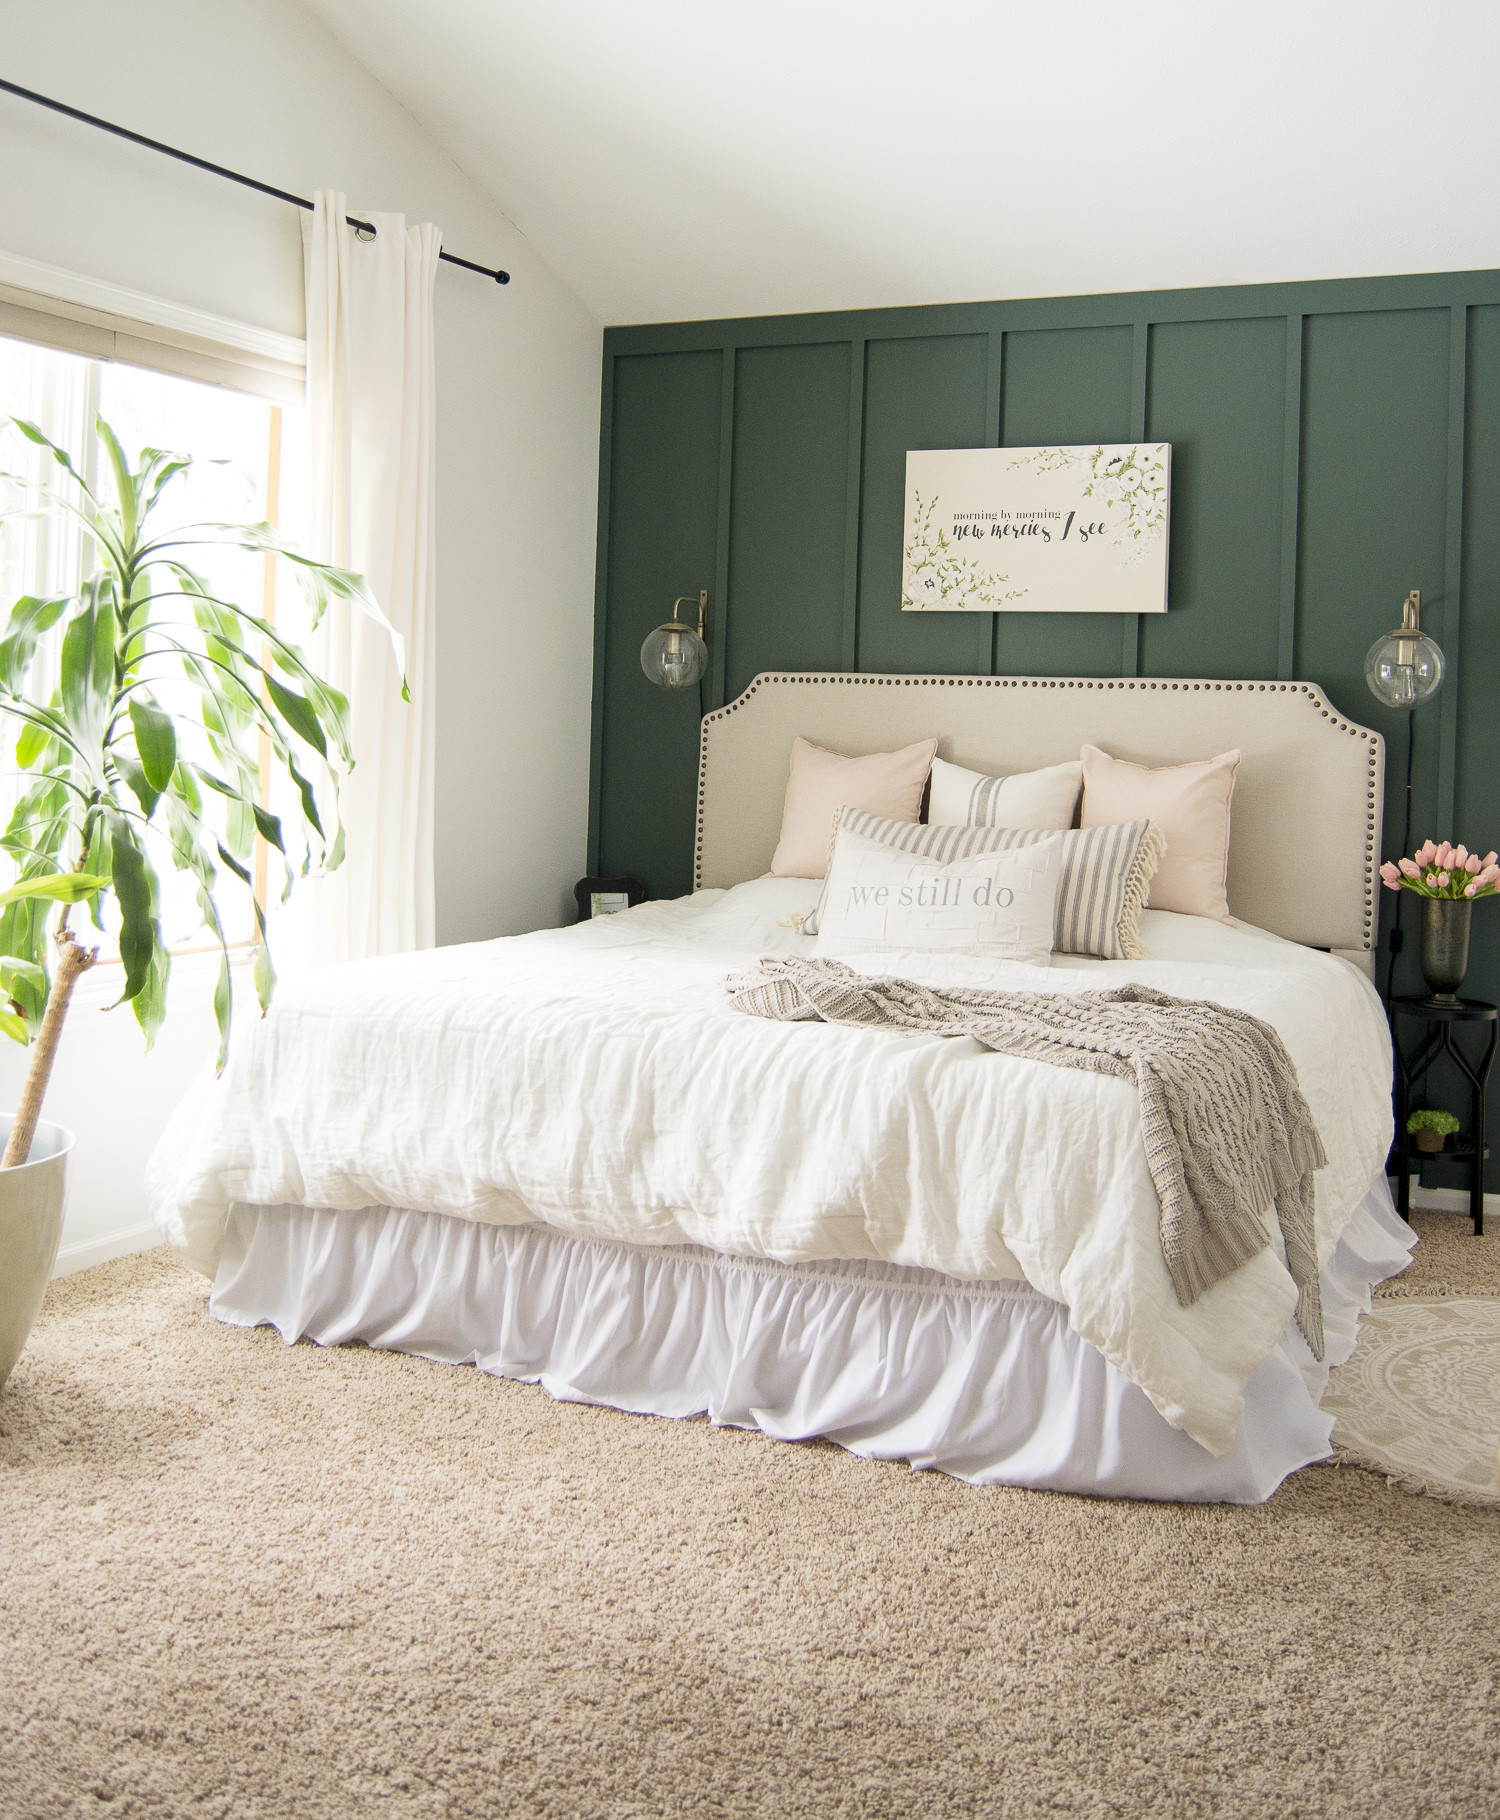 Modern Chic Bedroom Ideas
 Key Elements of a Modern Farmhouse Bedroom